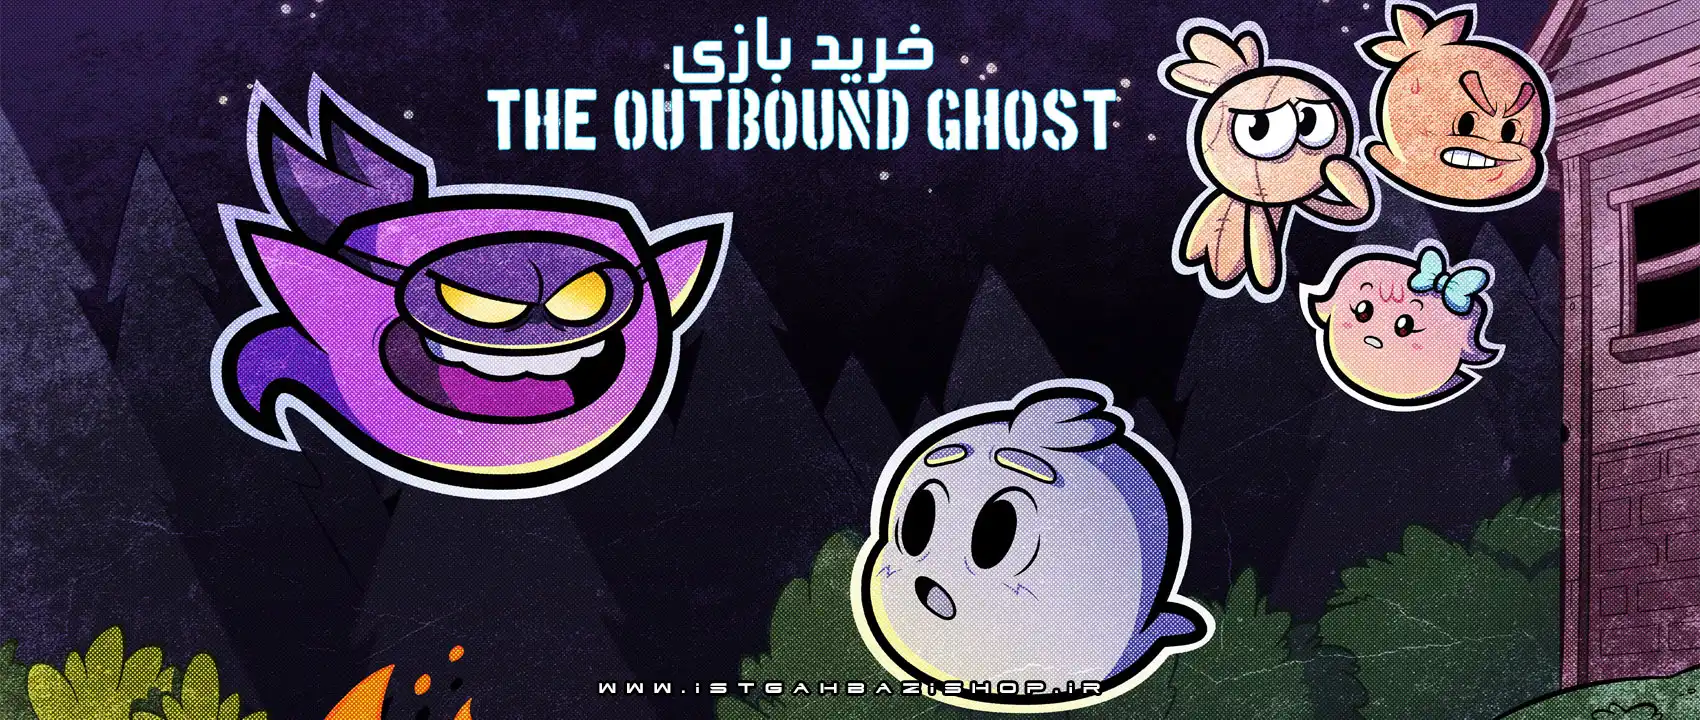 بازی The Outbound Ghost برای PS4